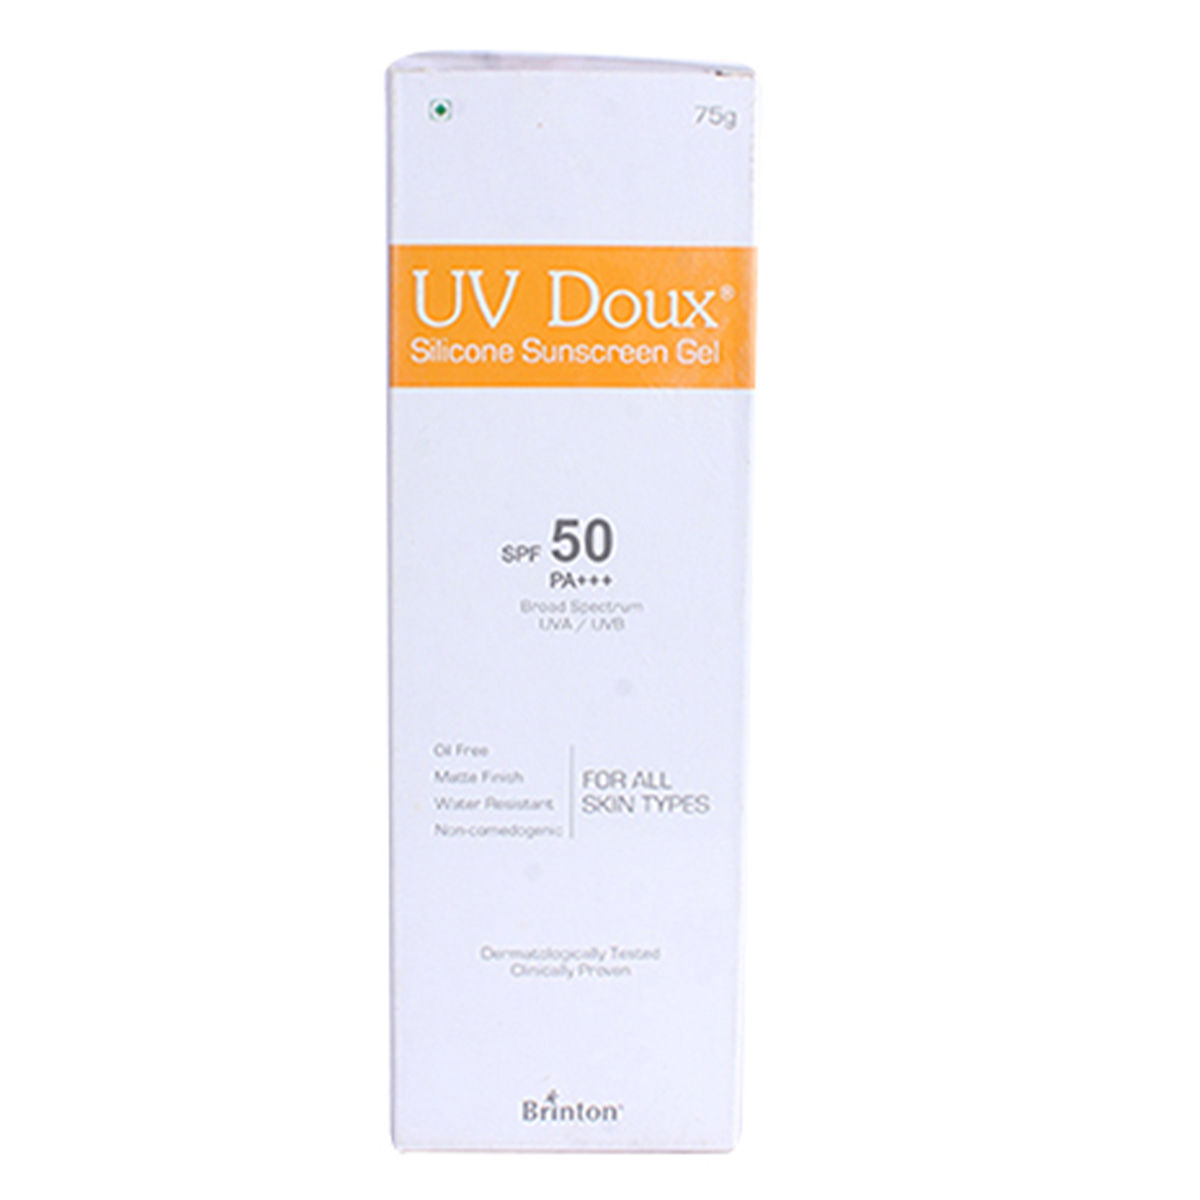 Buy UV Doux SPF 50+ Silicone Sunscreen Gel 75 gm Online